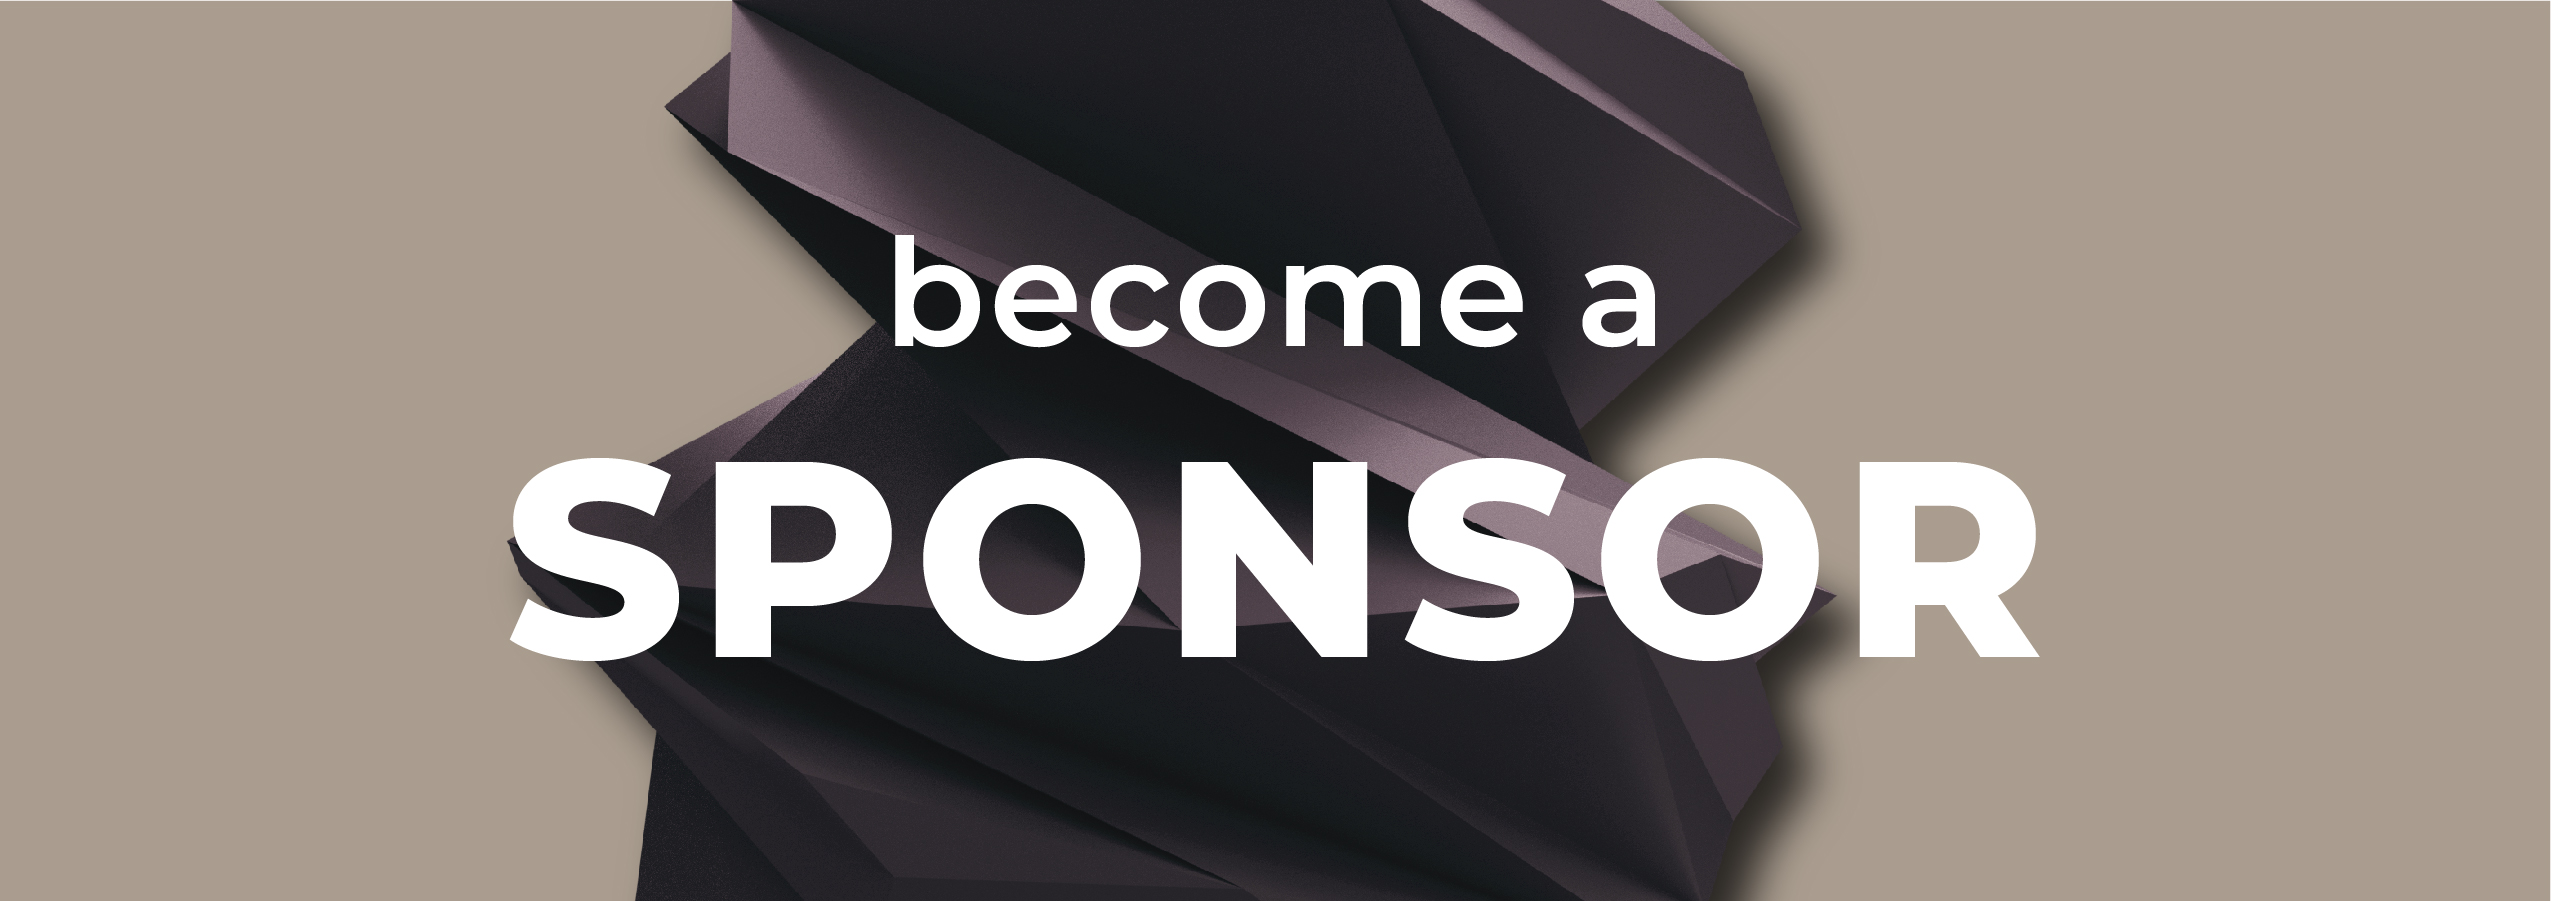 become-a-sponsor.jpg